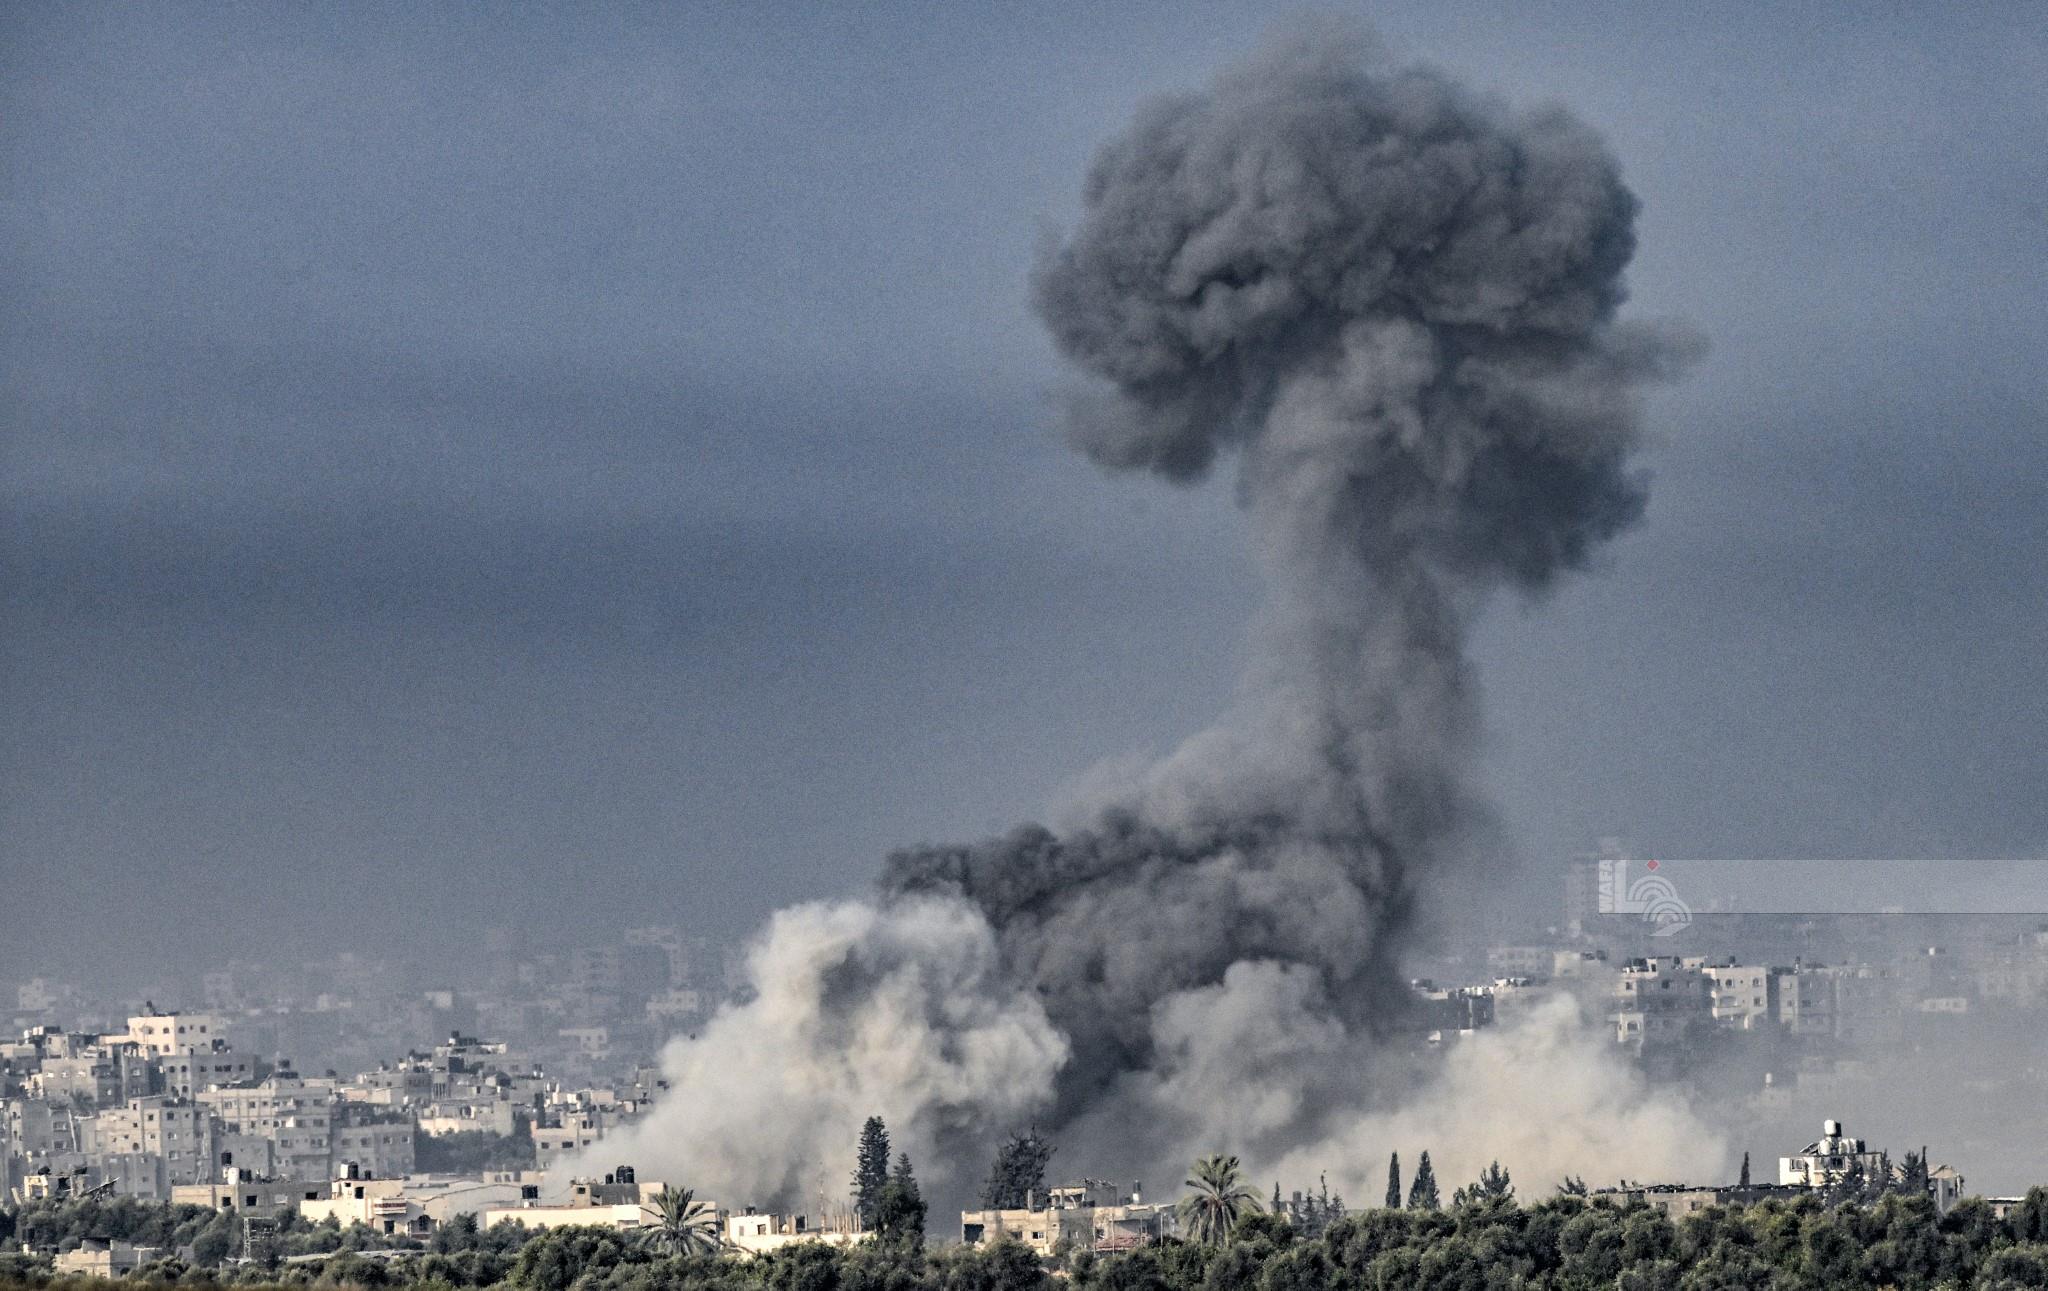 Israeli officials seize AP equipment, end live broadcast on Gaza